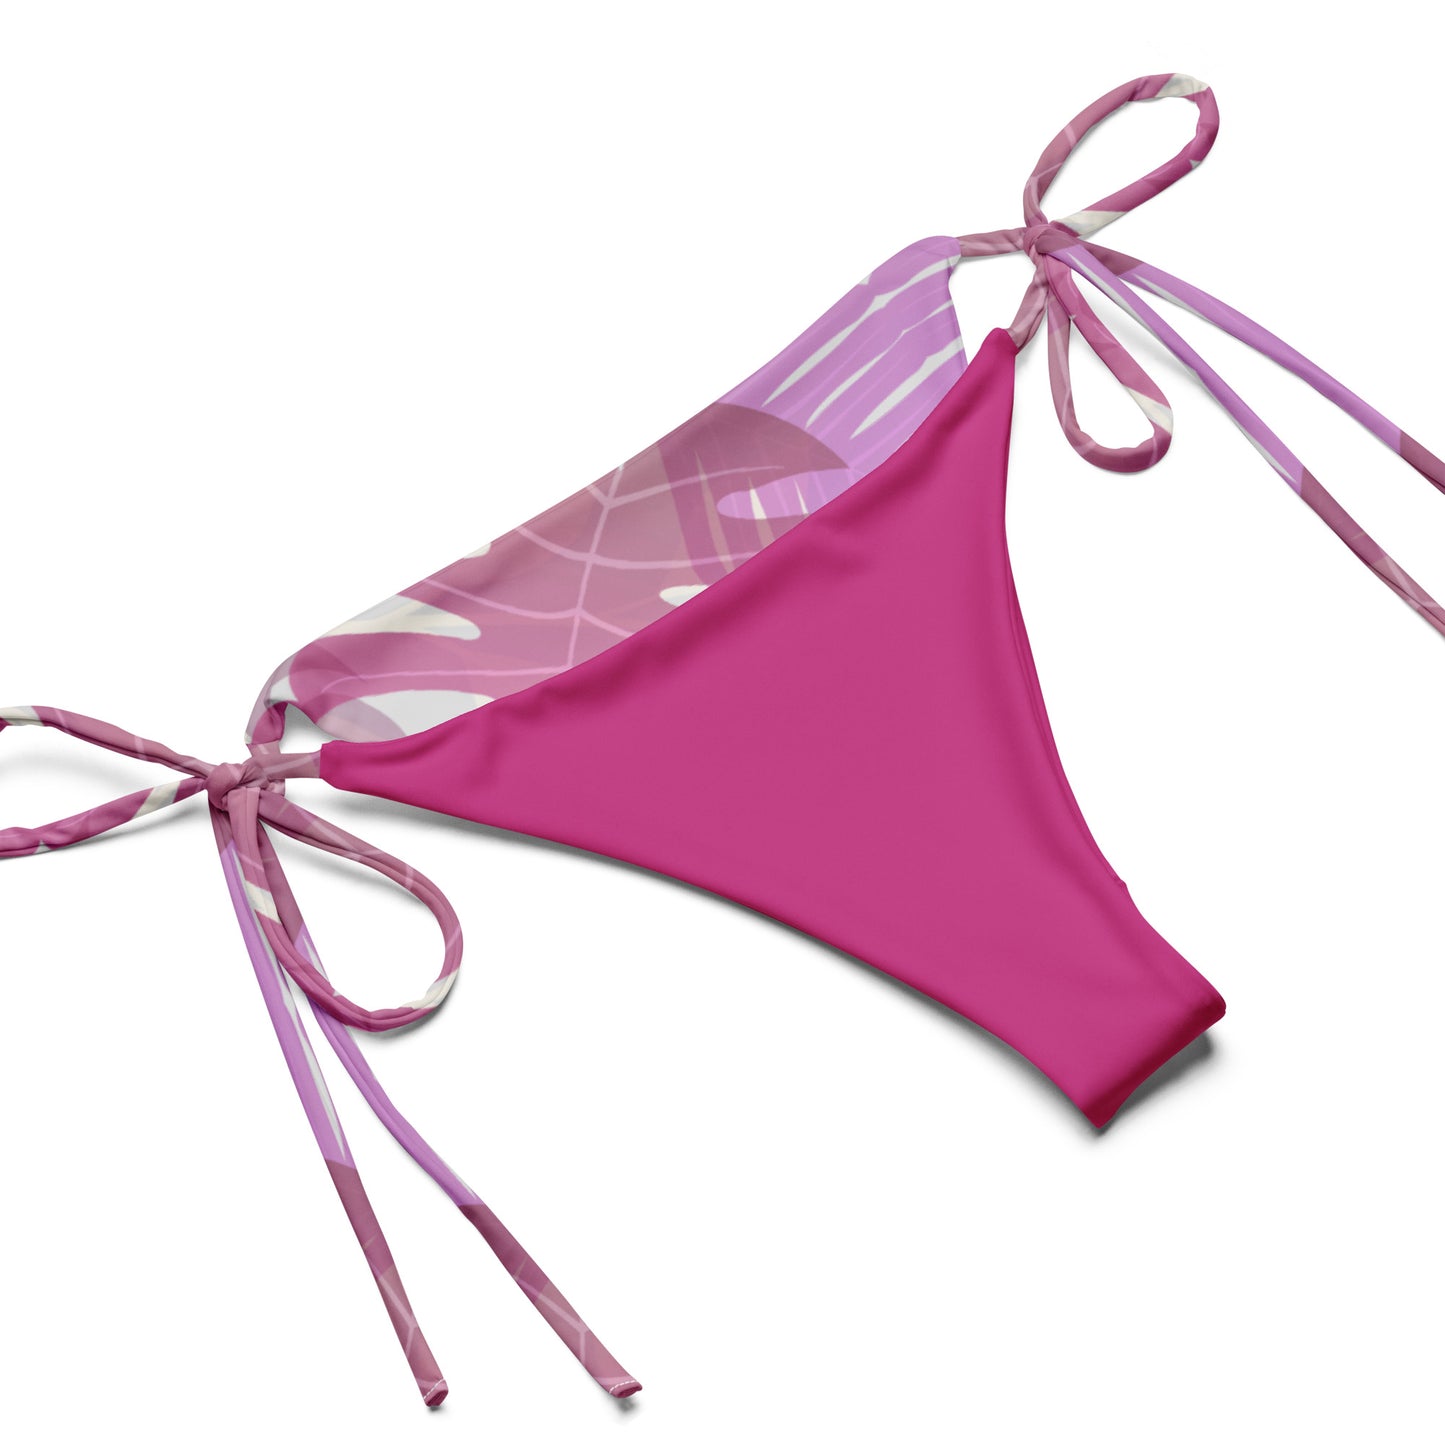 Bikini triangle - Violetta